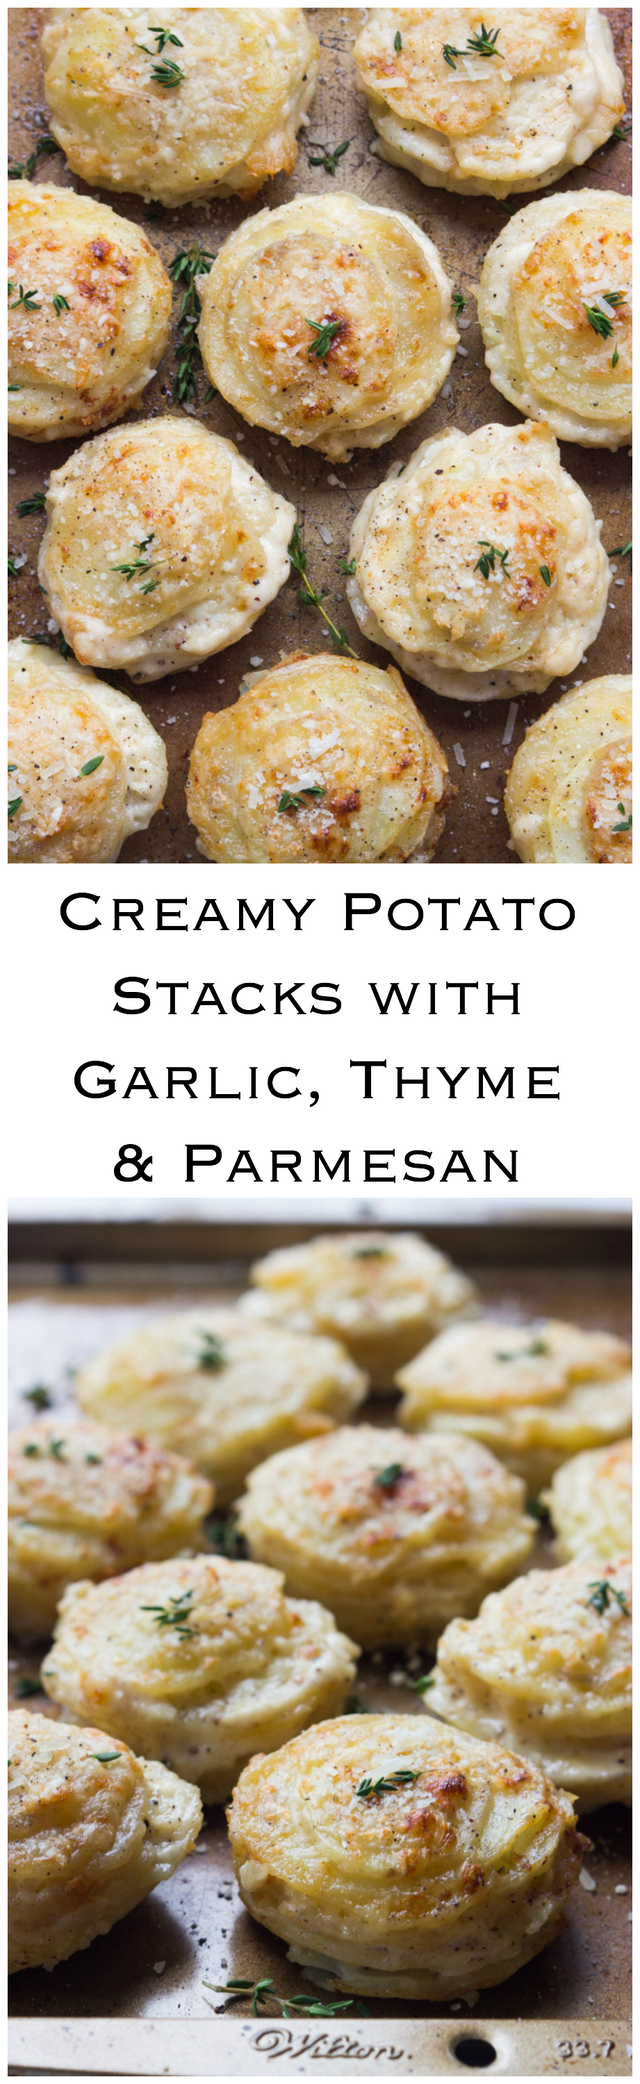 Creamy Potato Stacks with Garlic, Thyme, and Parmesan